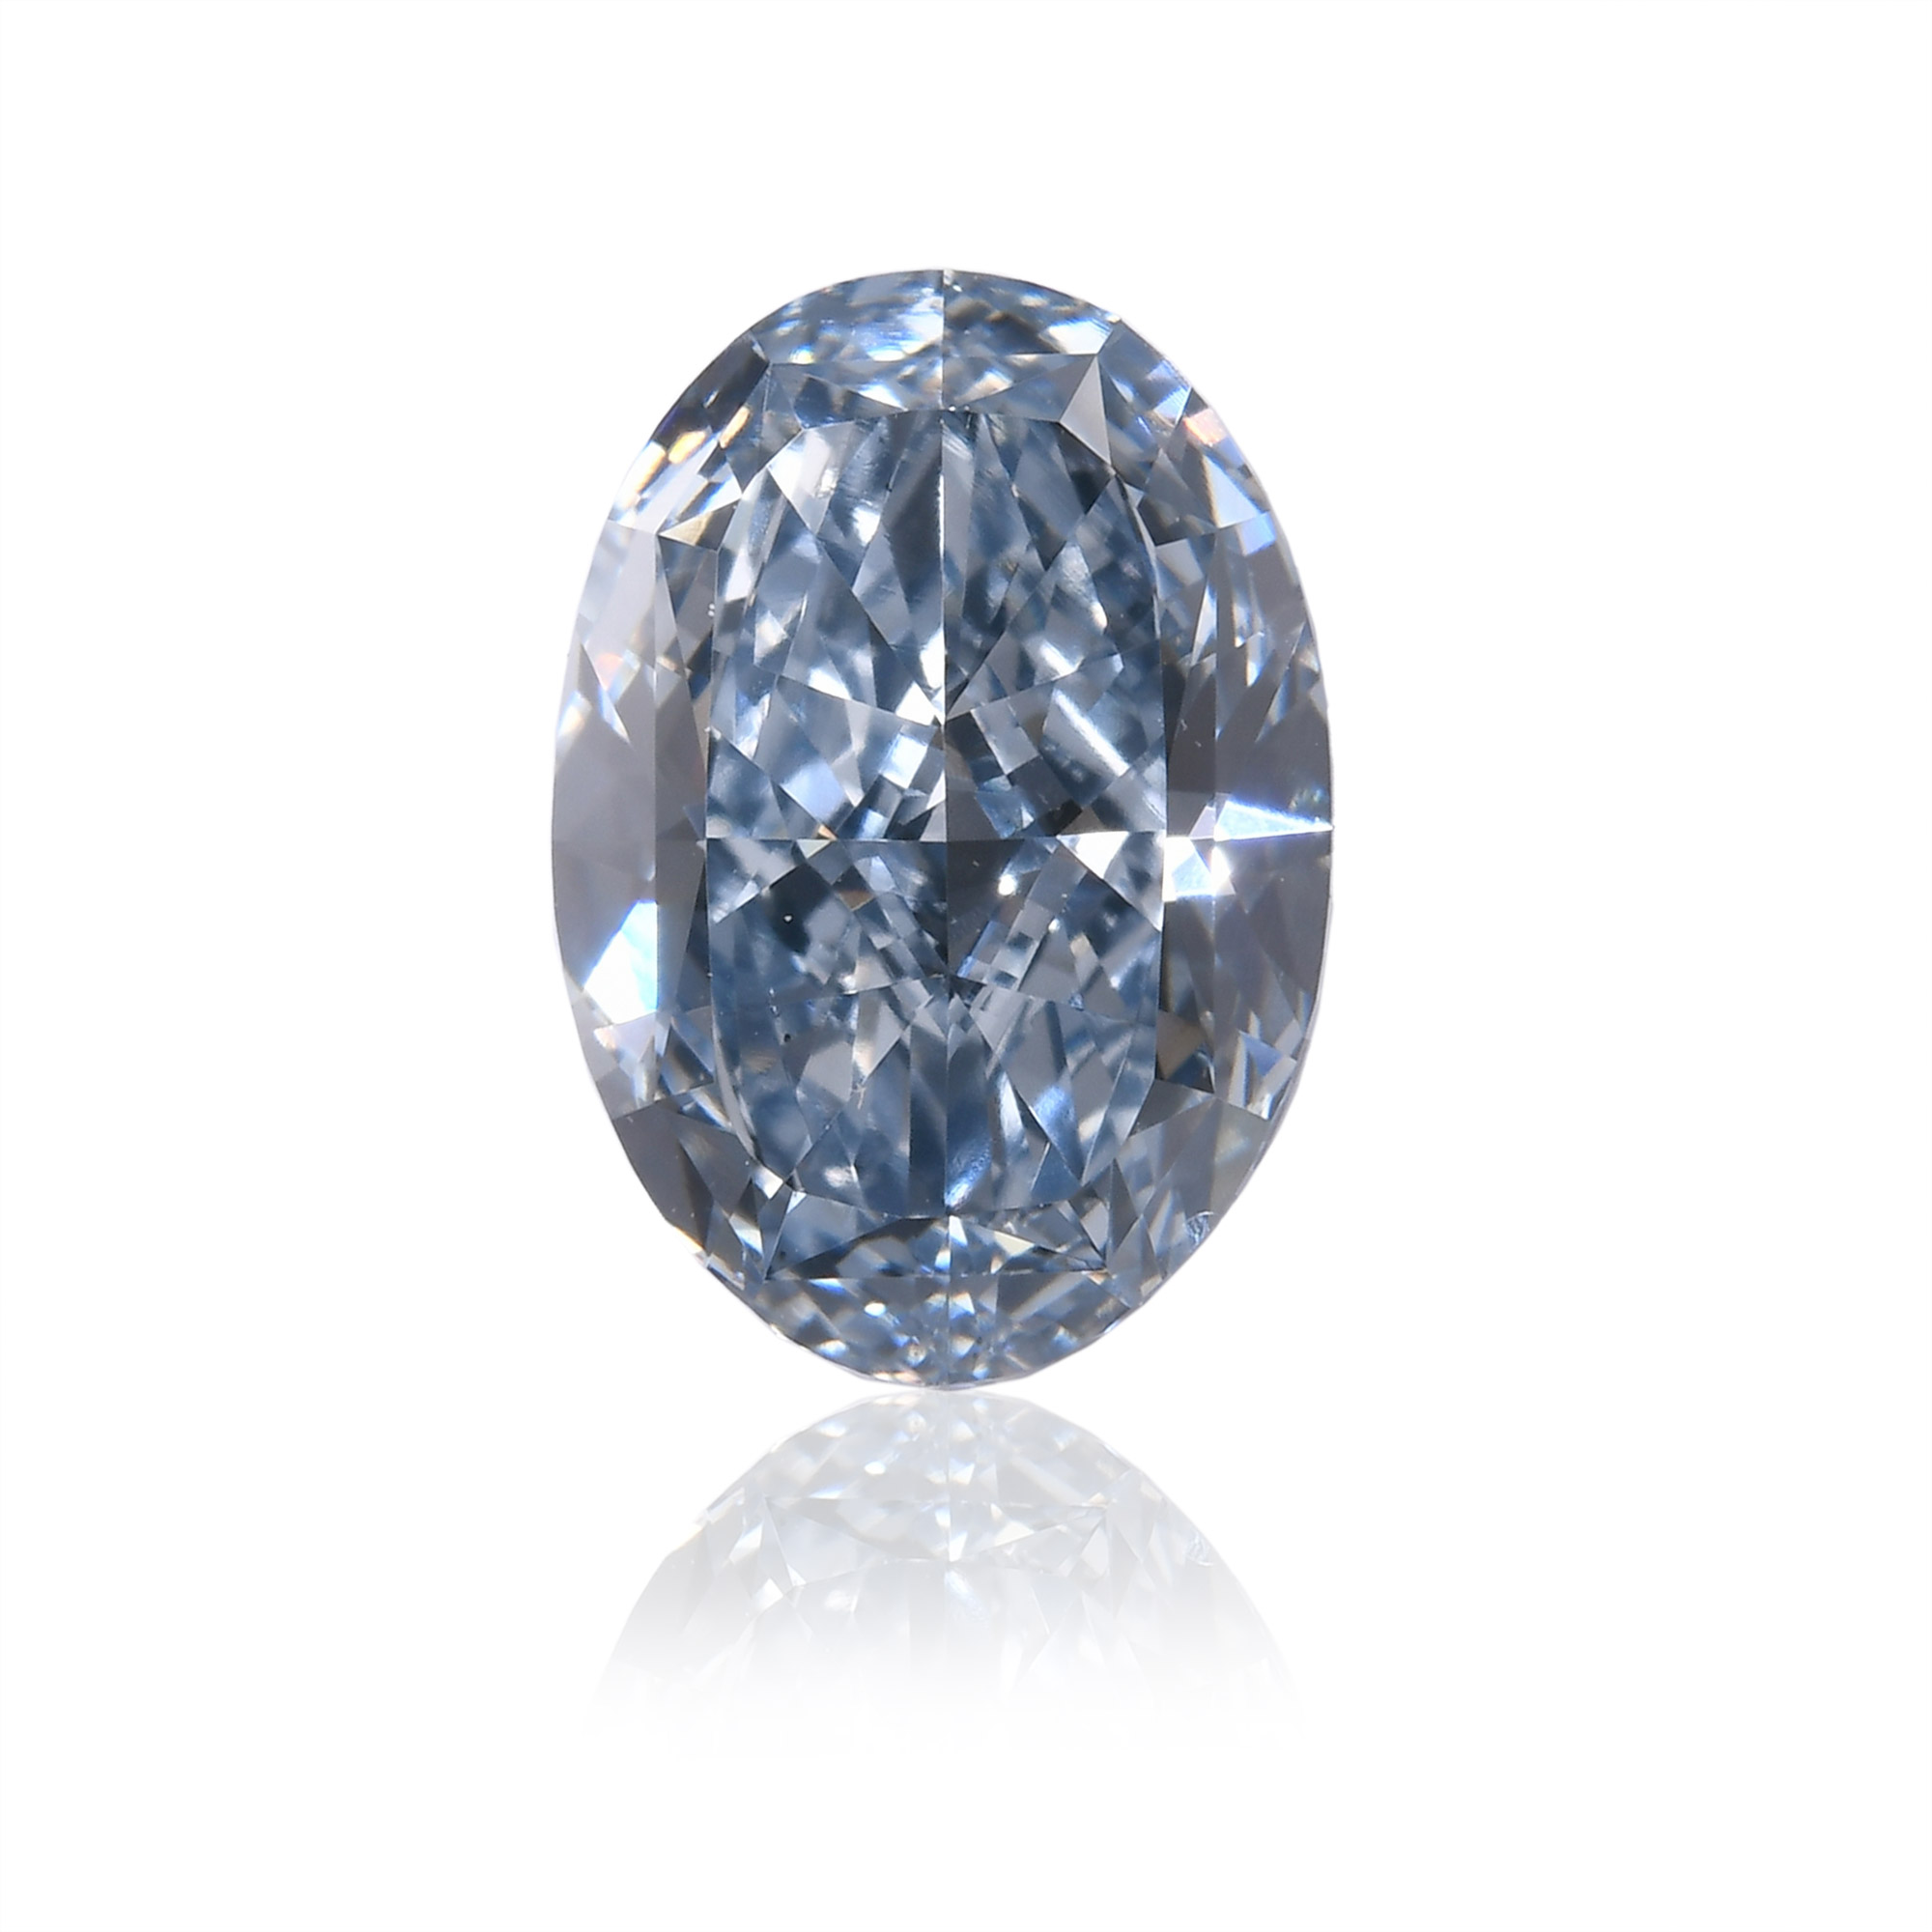 LEIBISH  1.21 carat, Fancy Intense Blue Diamond, Oval Shape, VS2 Clarity, GIA